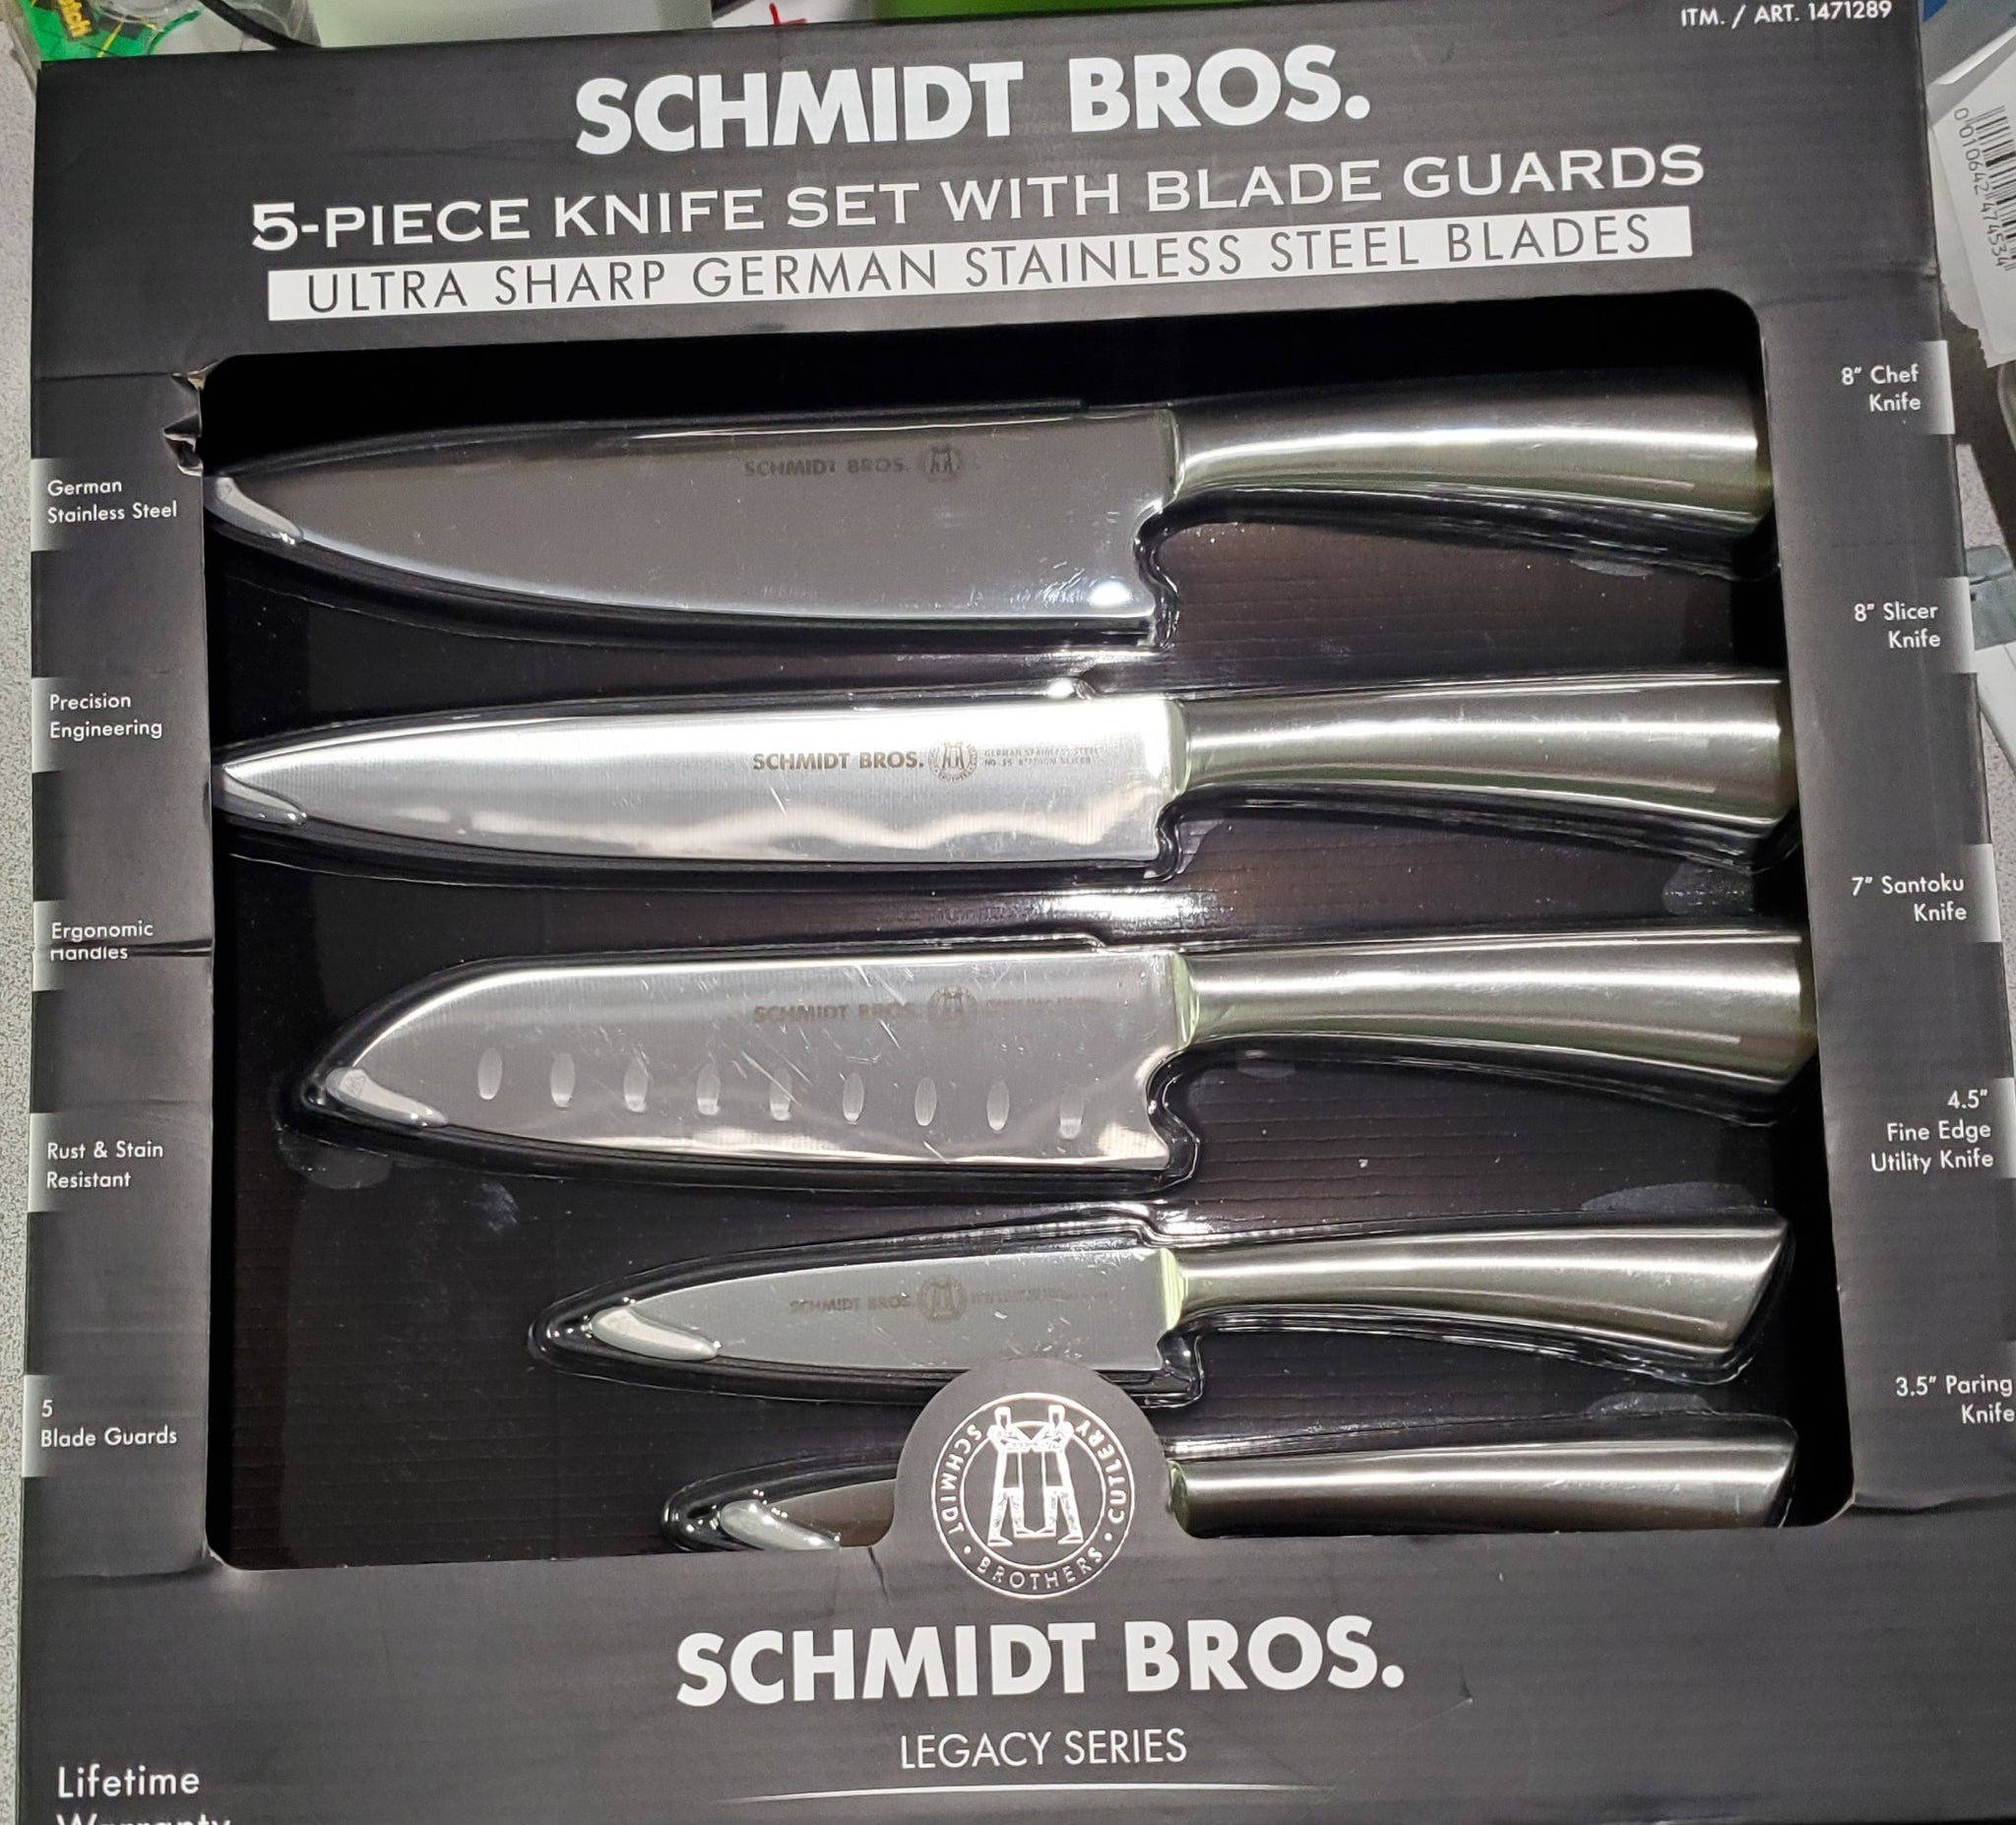 Bros. – + Sharp Pc Schmidt 5 Set Knife Blade Legacy Series, Ultra Guards